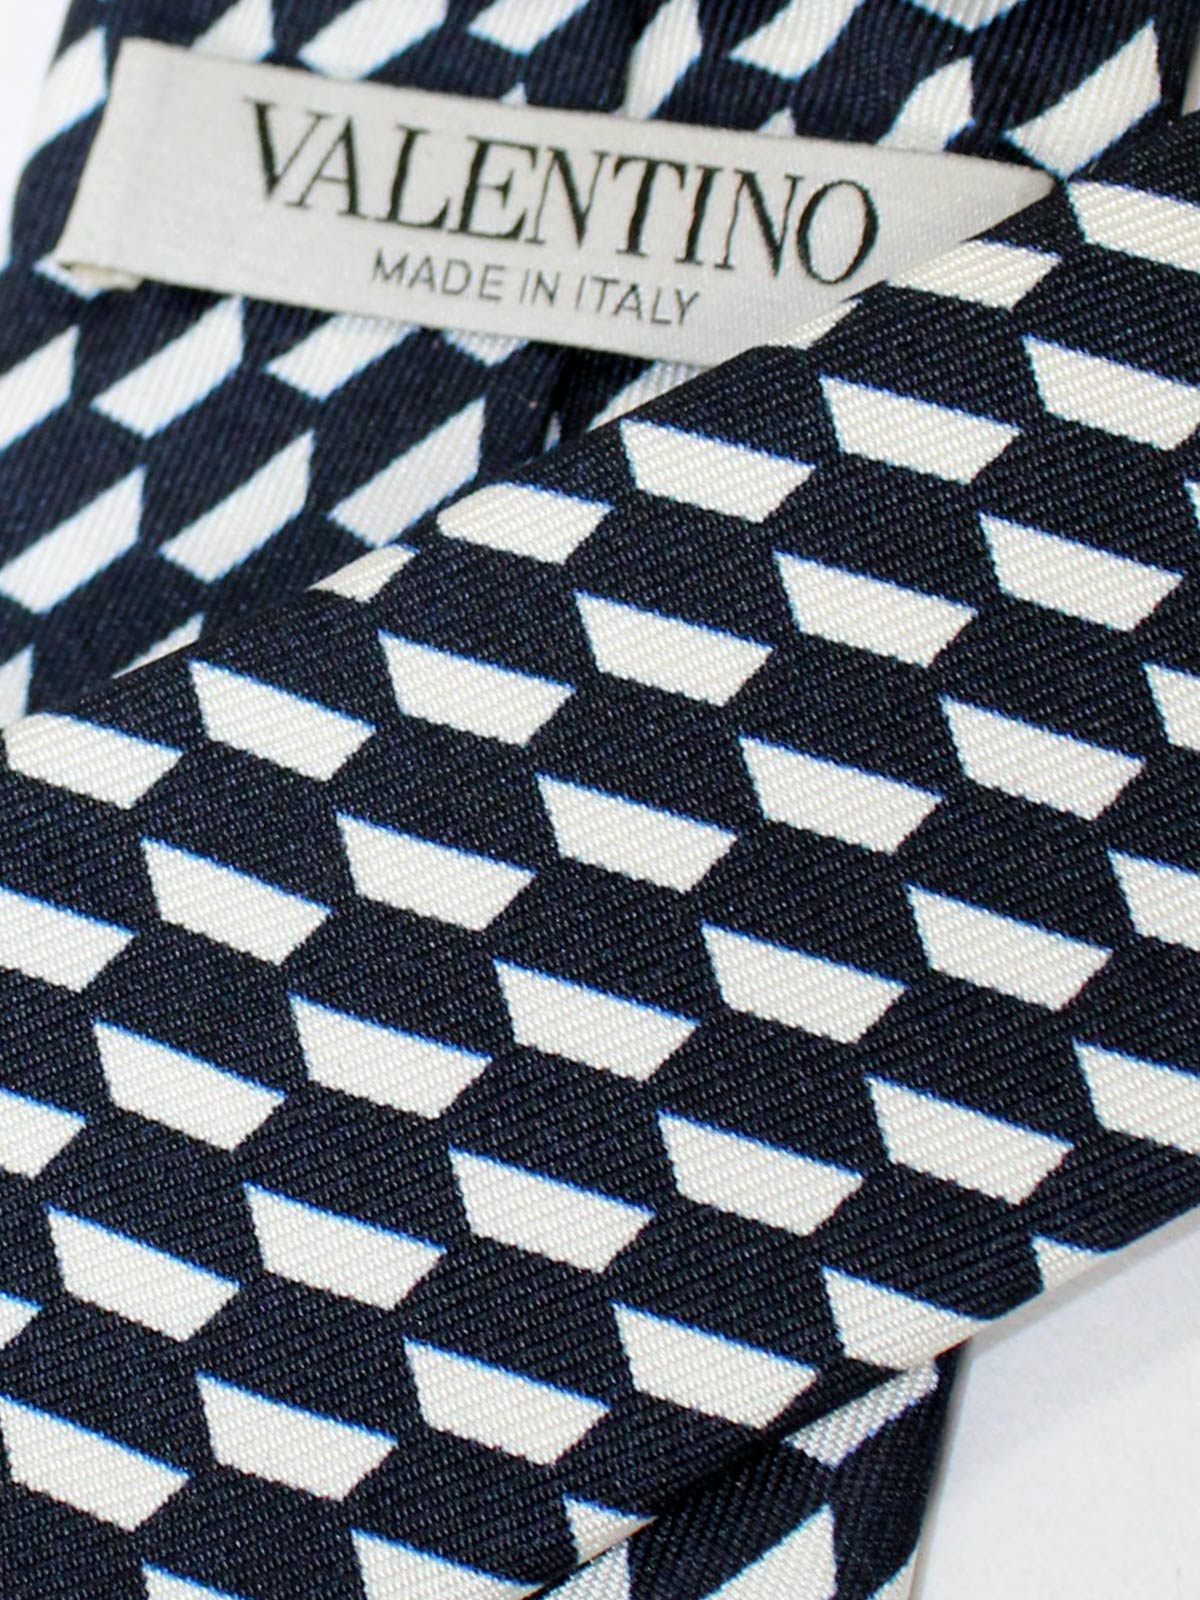 Valentino Skinny Tie - Black Geometric Design SALE - Tie Deals